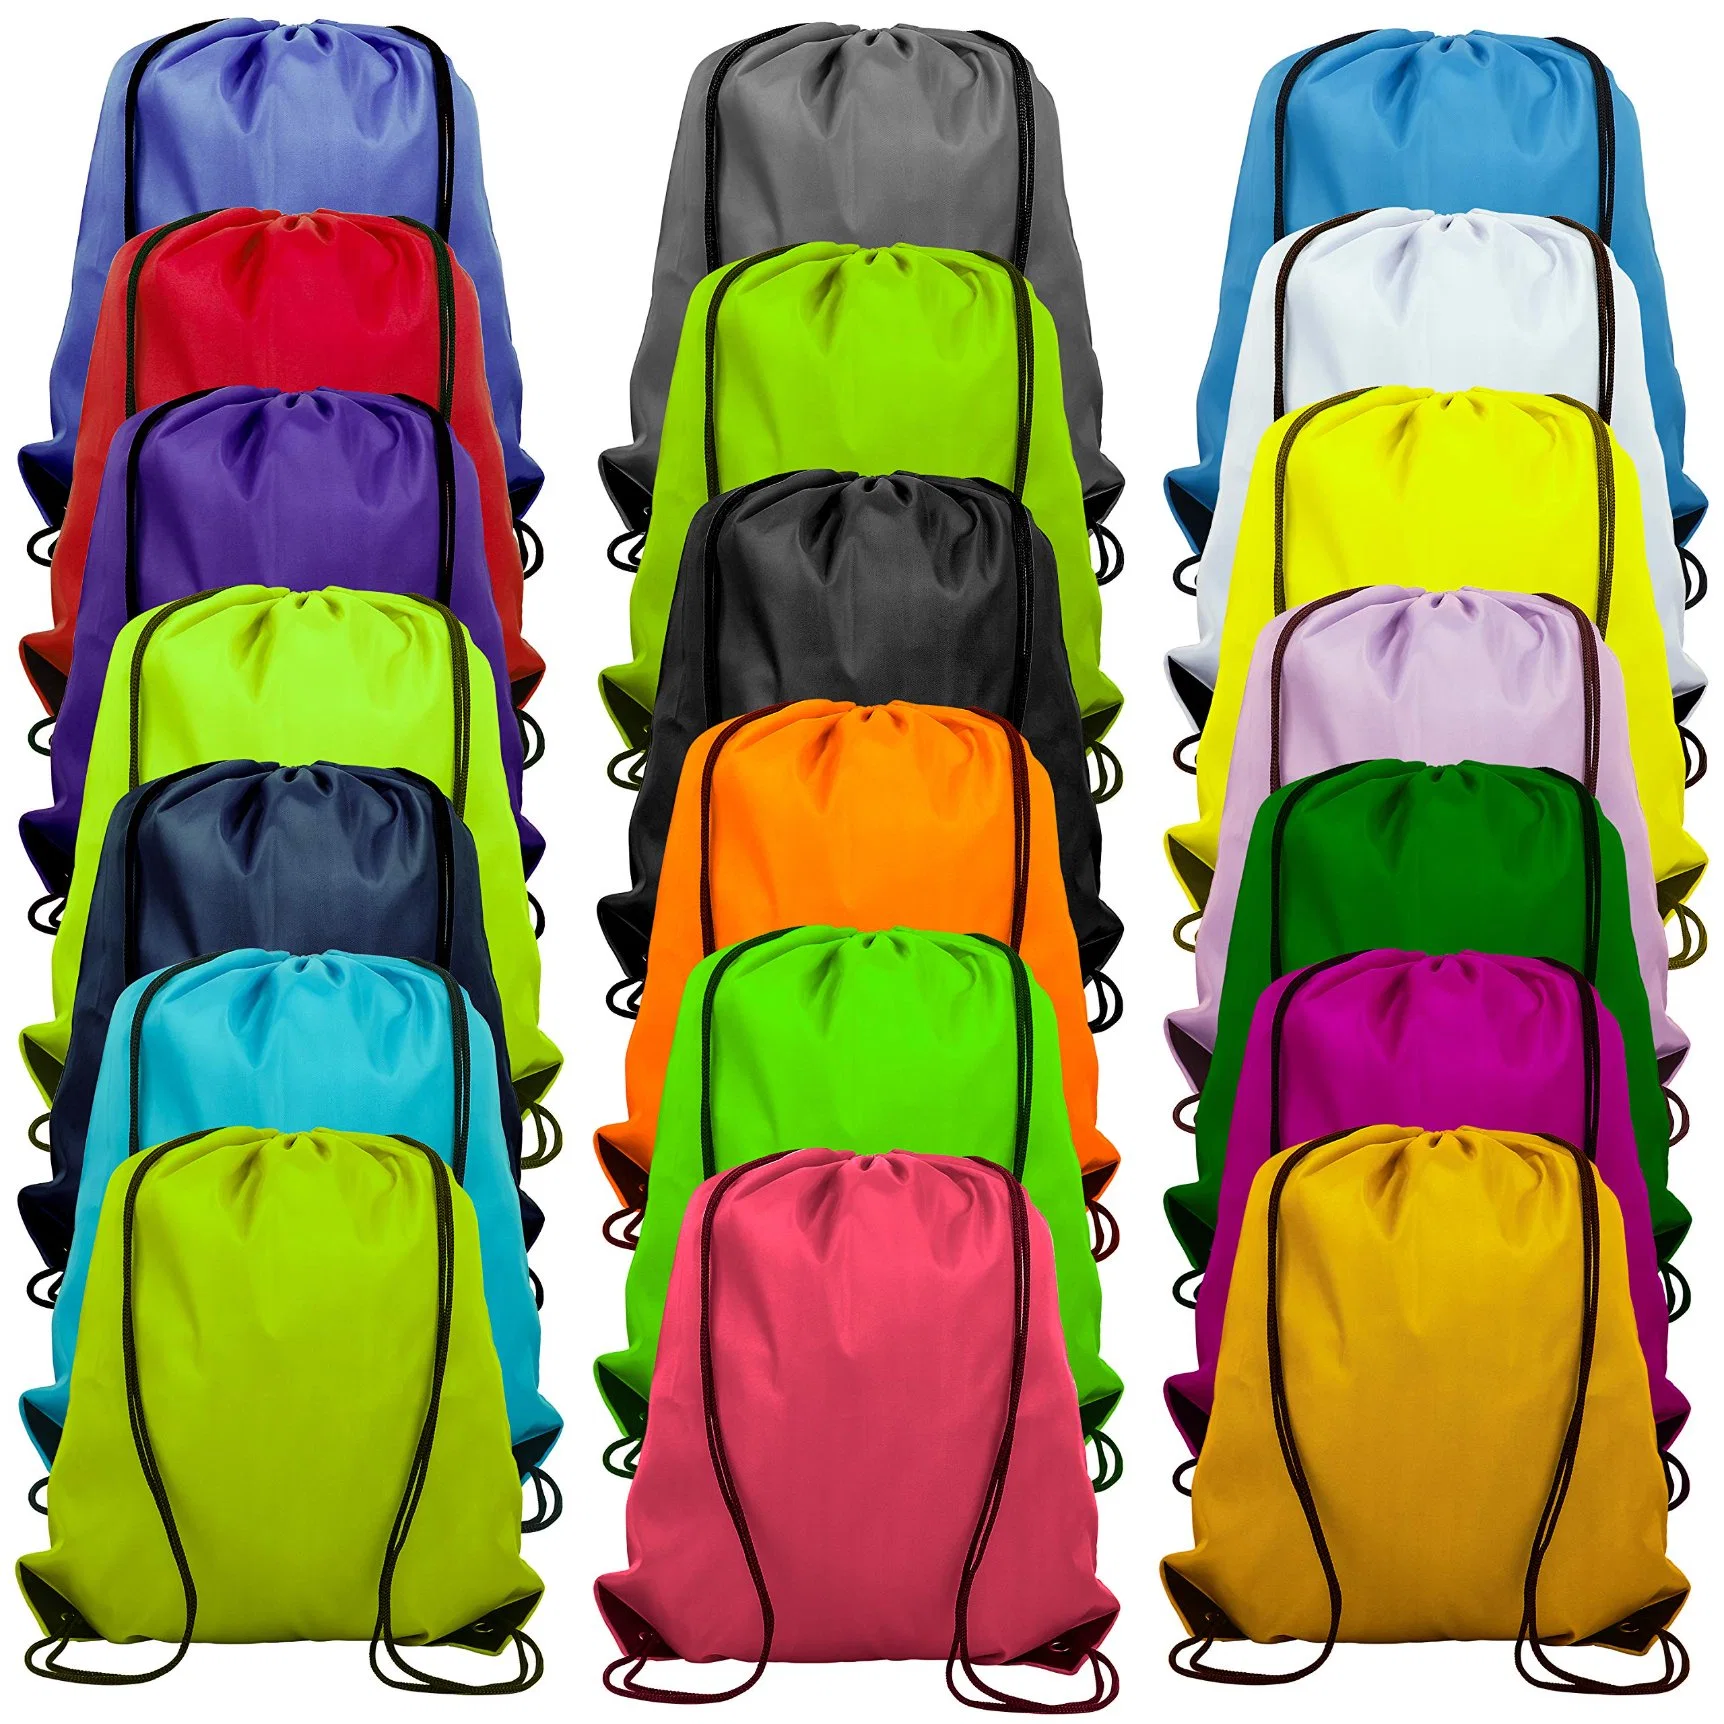 Drawstring Backpack Bags Sack Pack Cinch Tote Sport Storage Polyester Bag for Gym Traveling